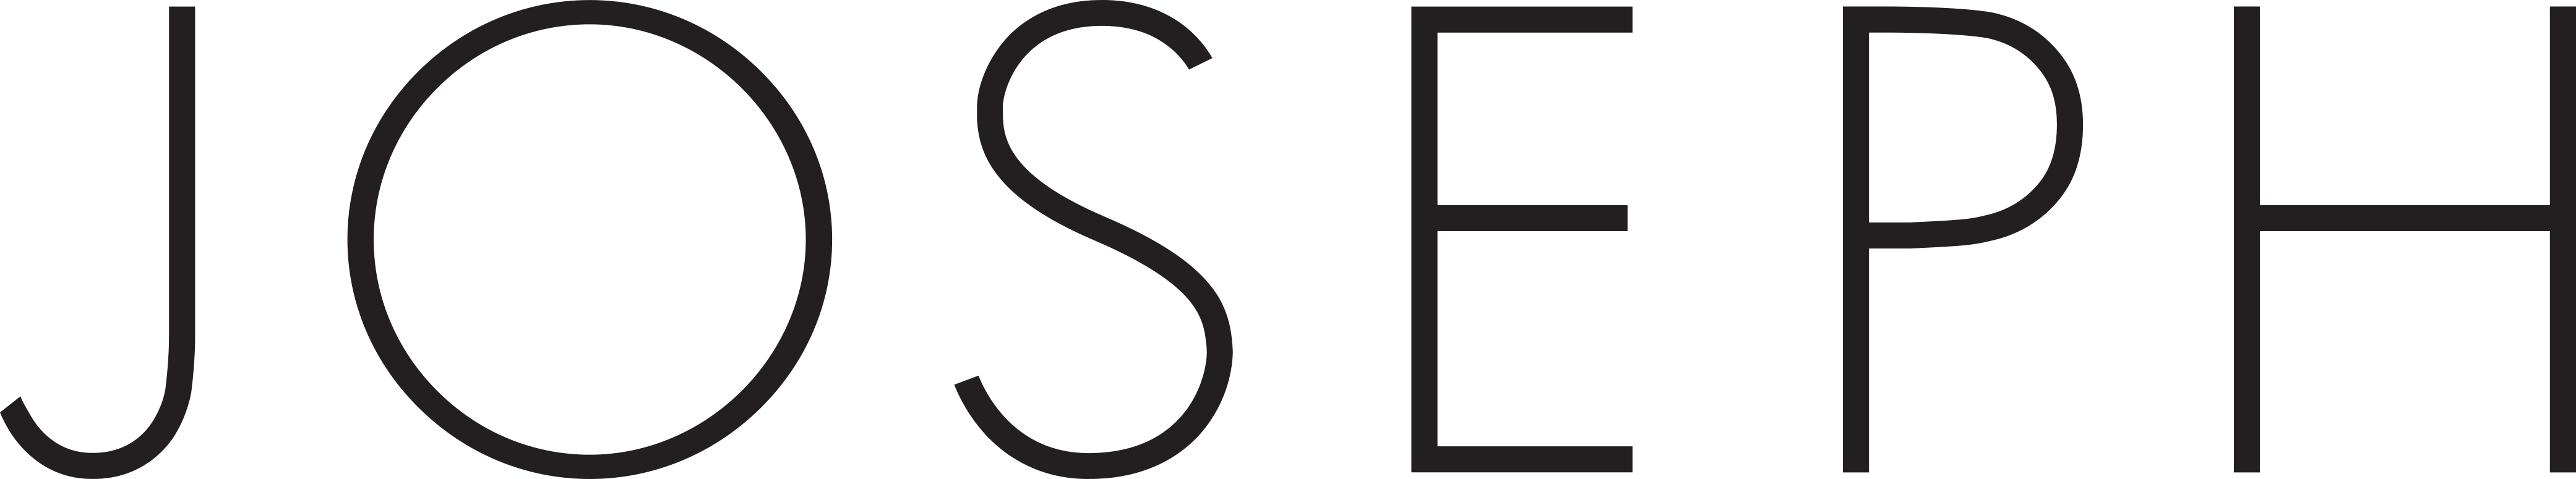 Joseph_logo